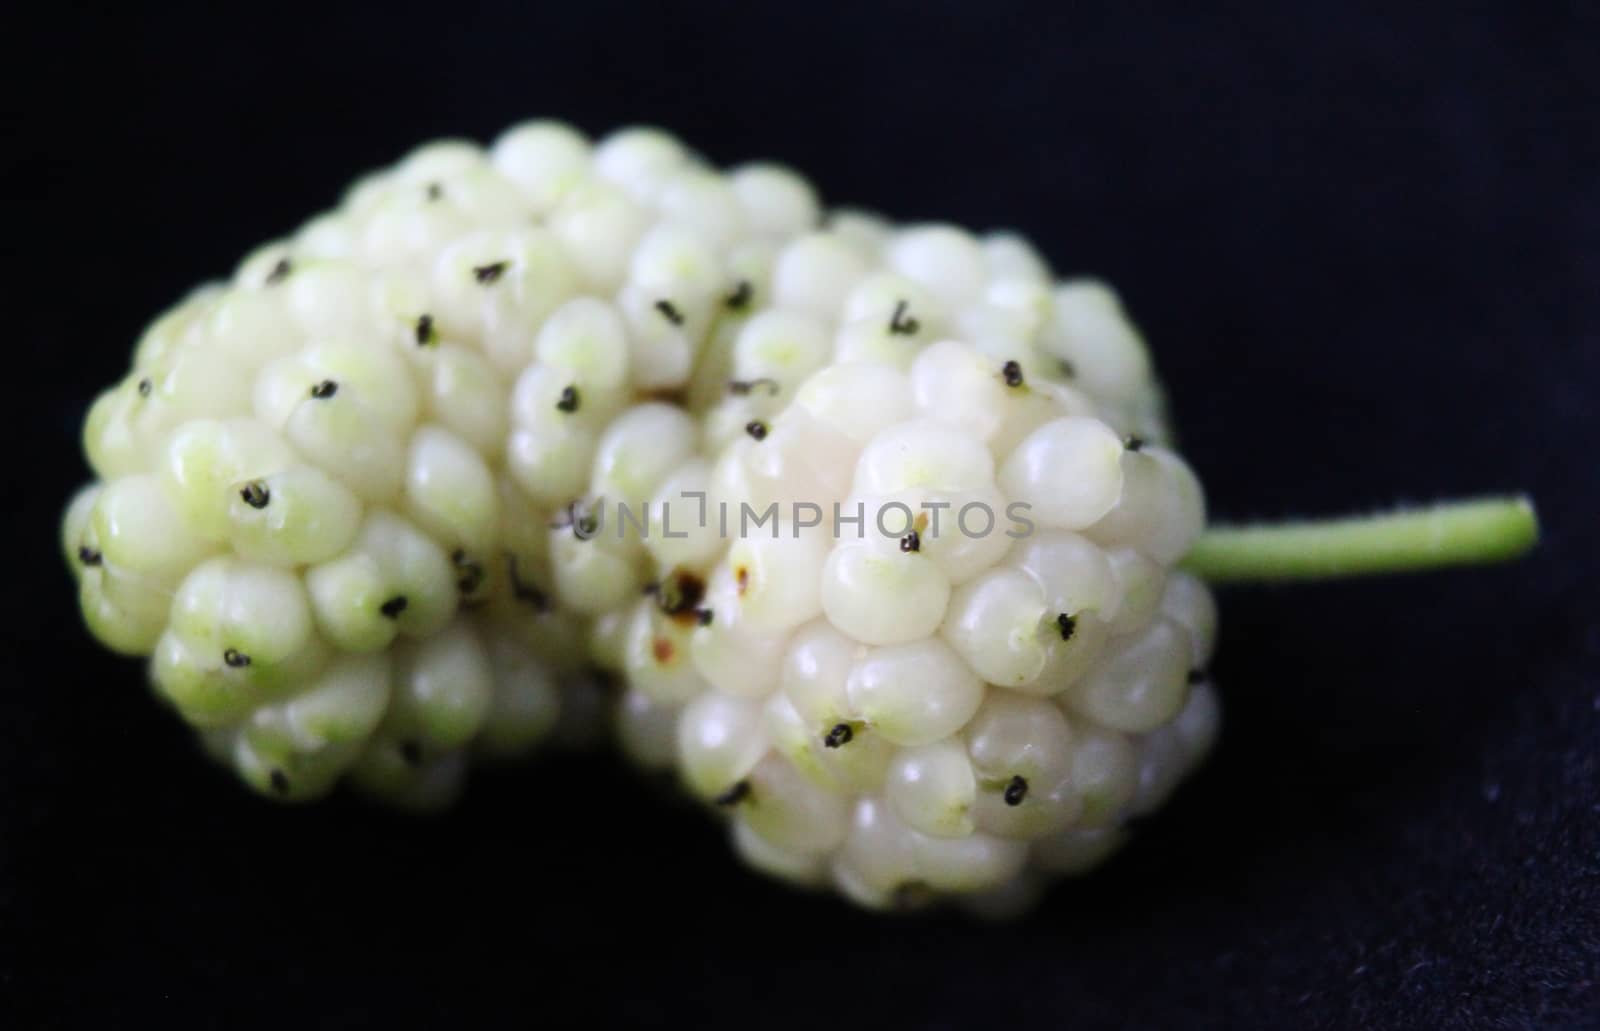 Morus alba, white mulberry. One ripe white mulberry fruit.